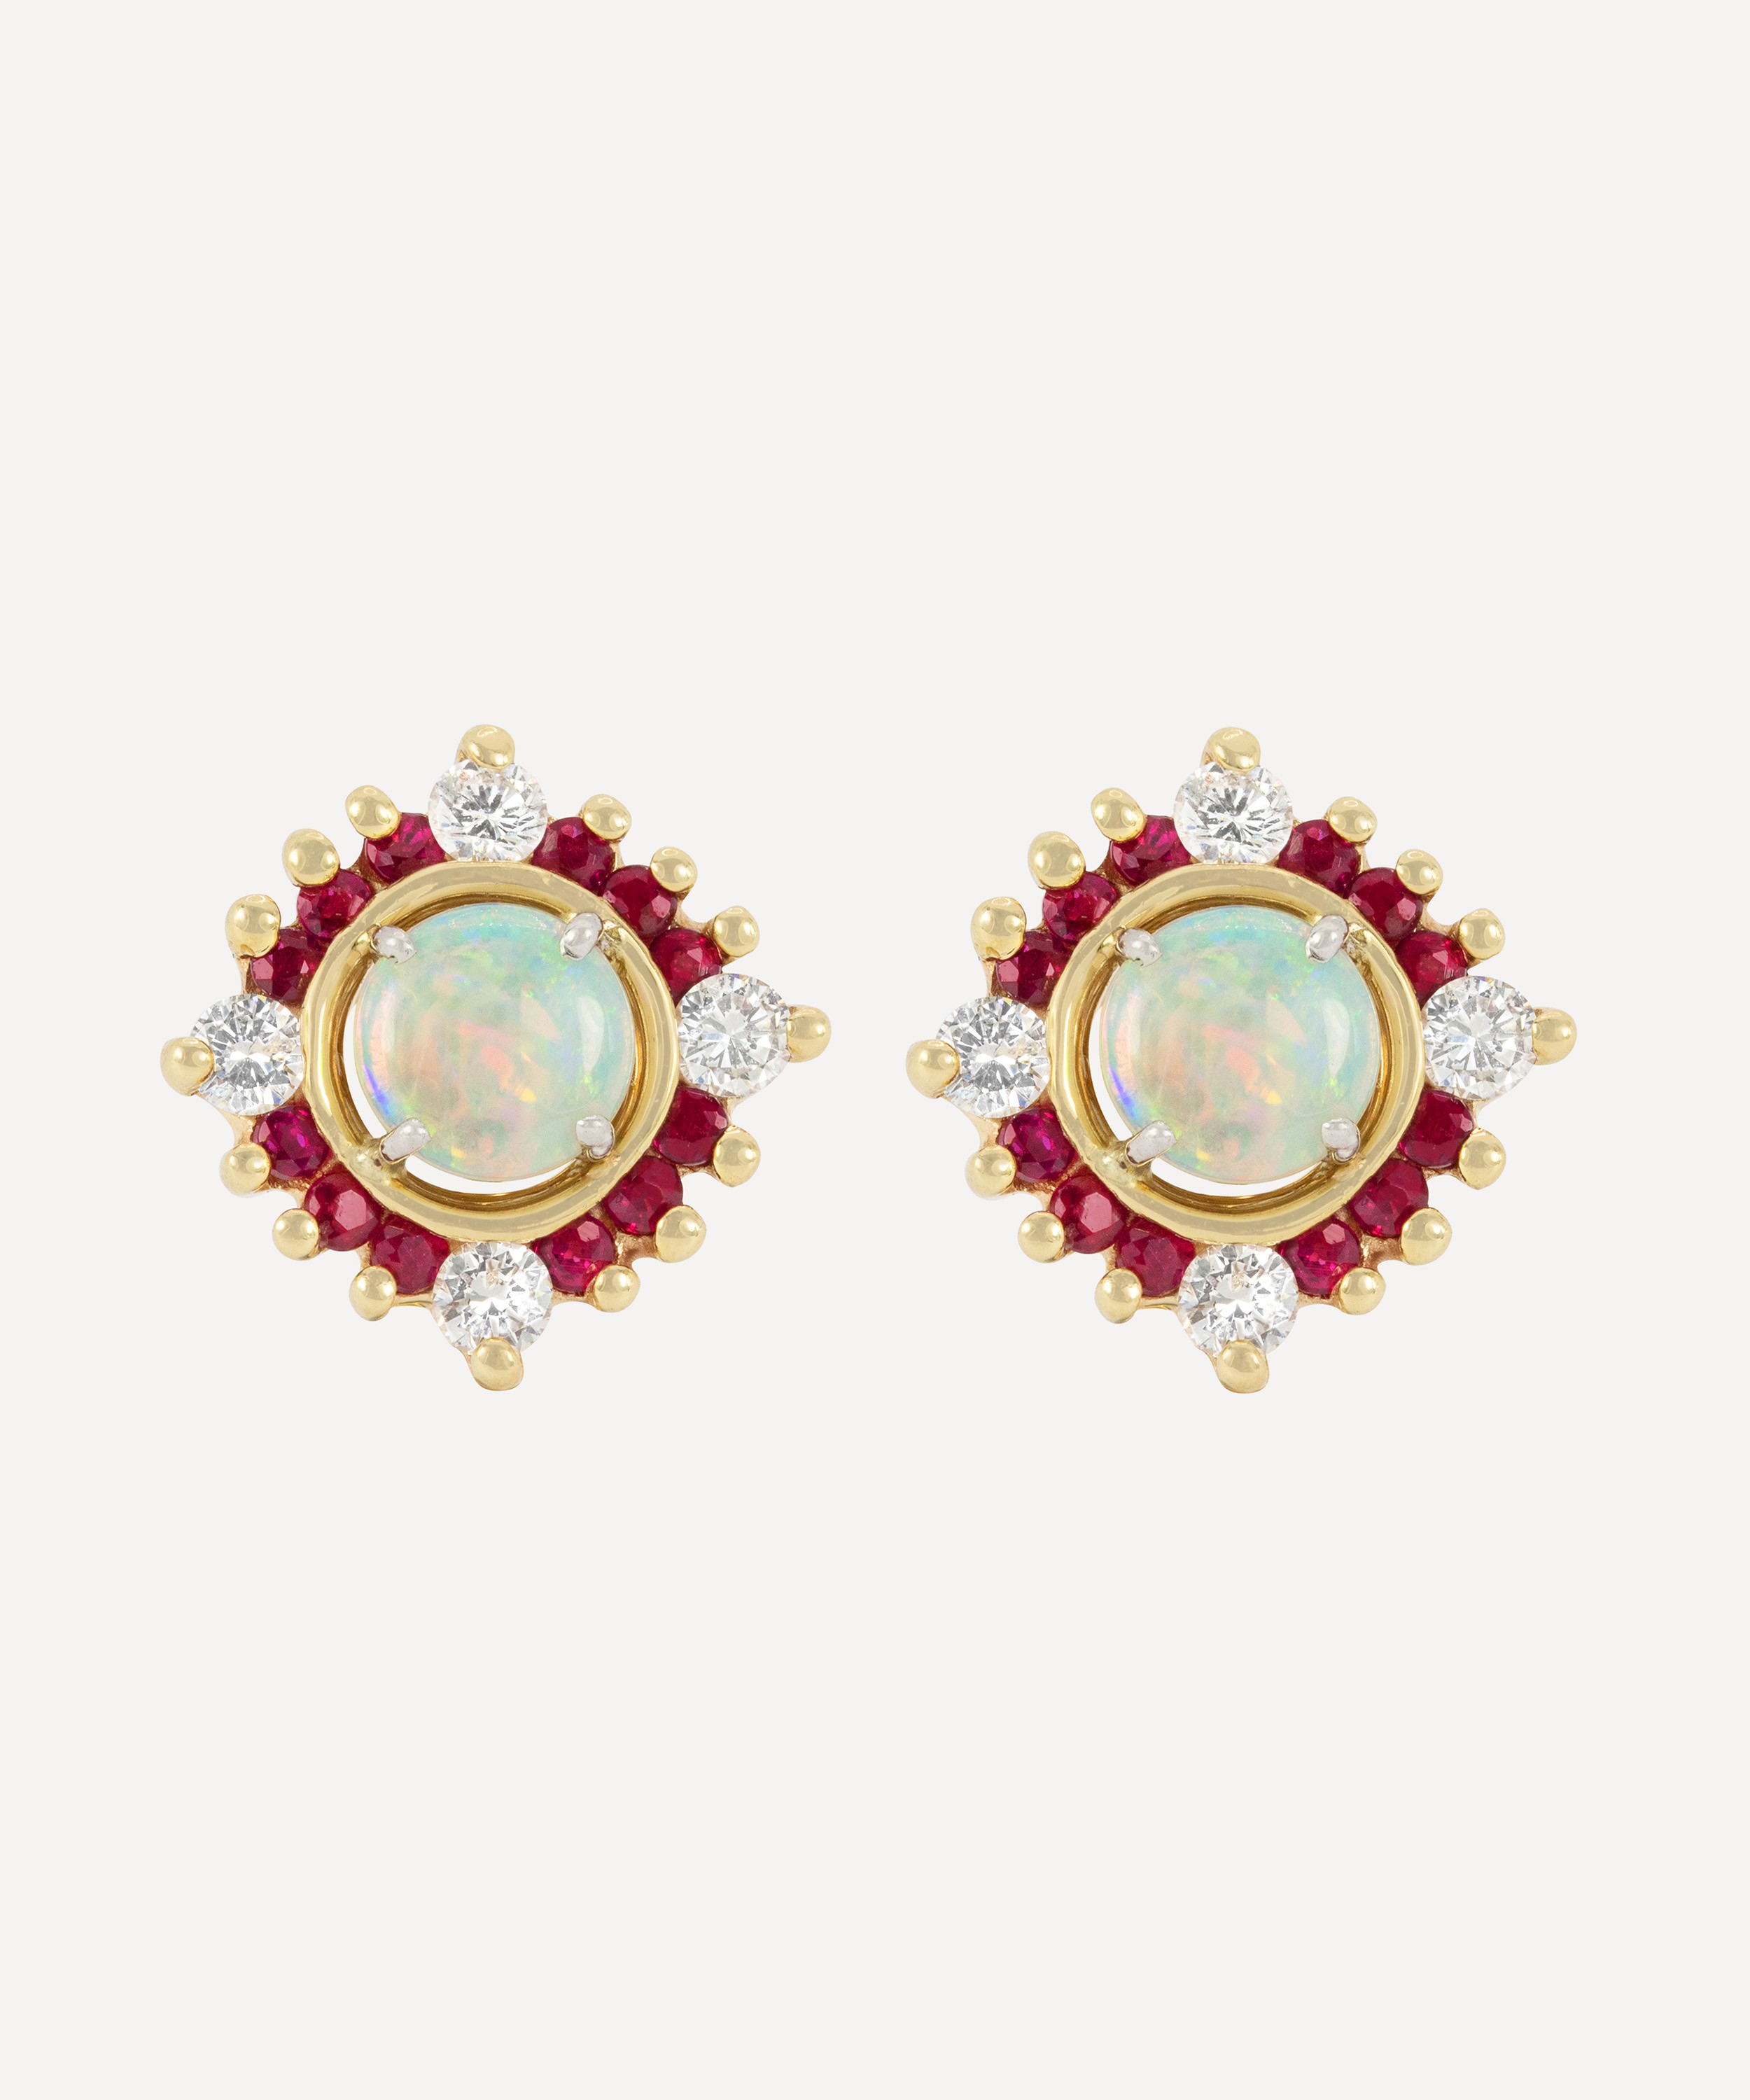 Kojis - 14ct Gold Opal and Diamond Cluster Stud Earrings